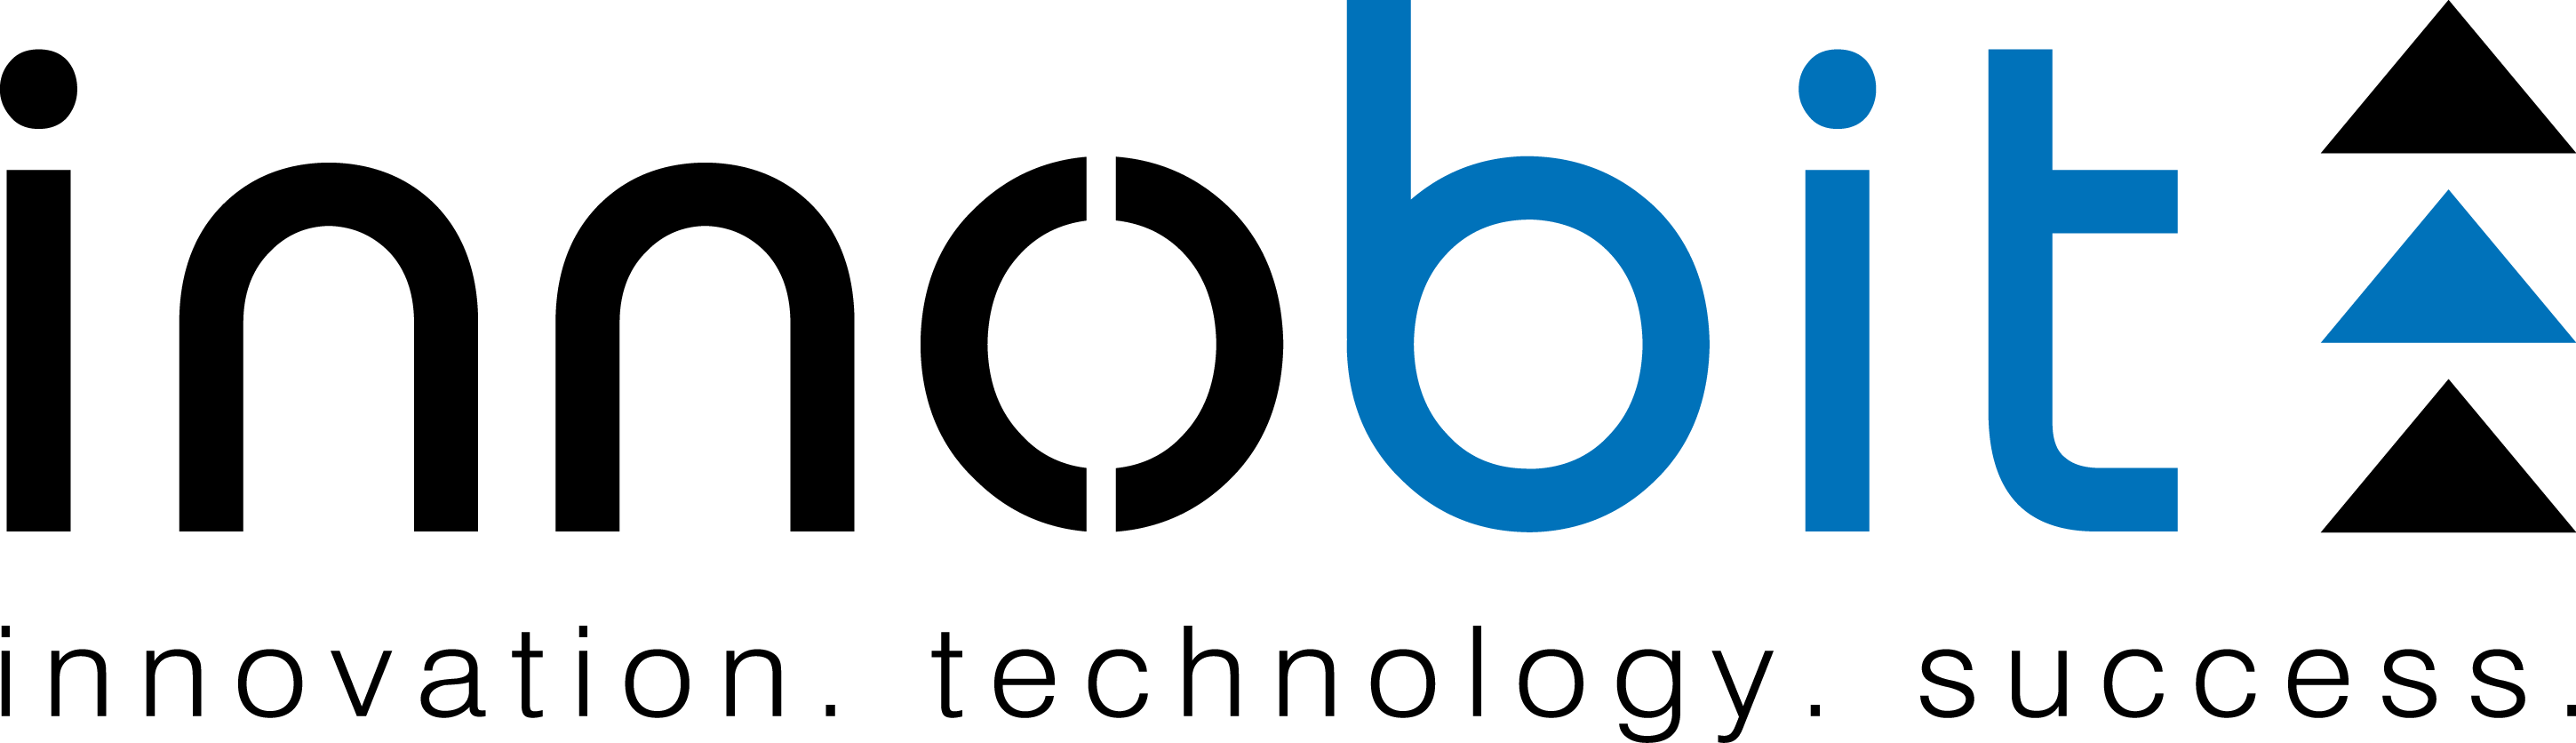 innobit-logo